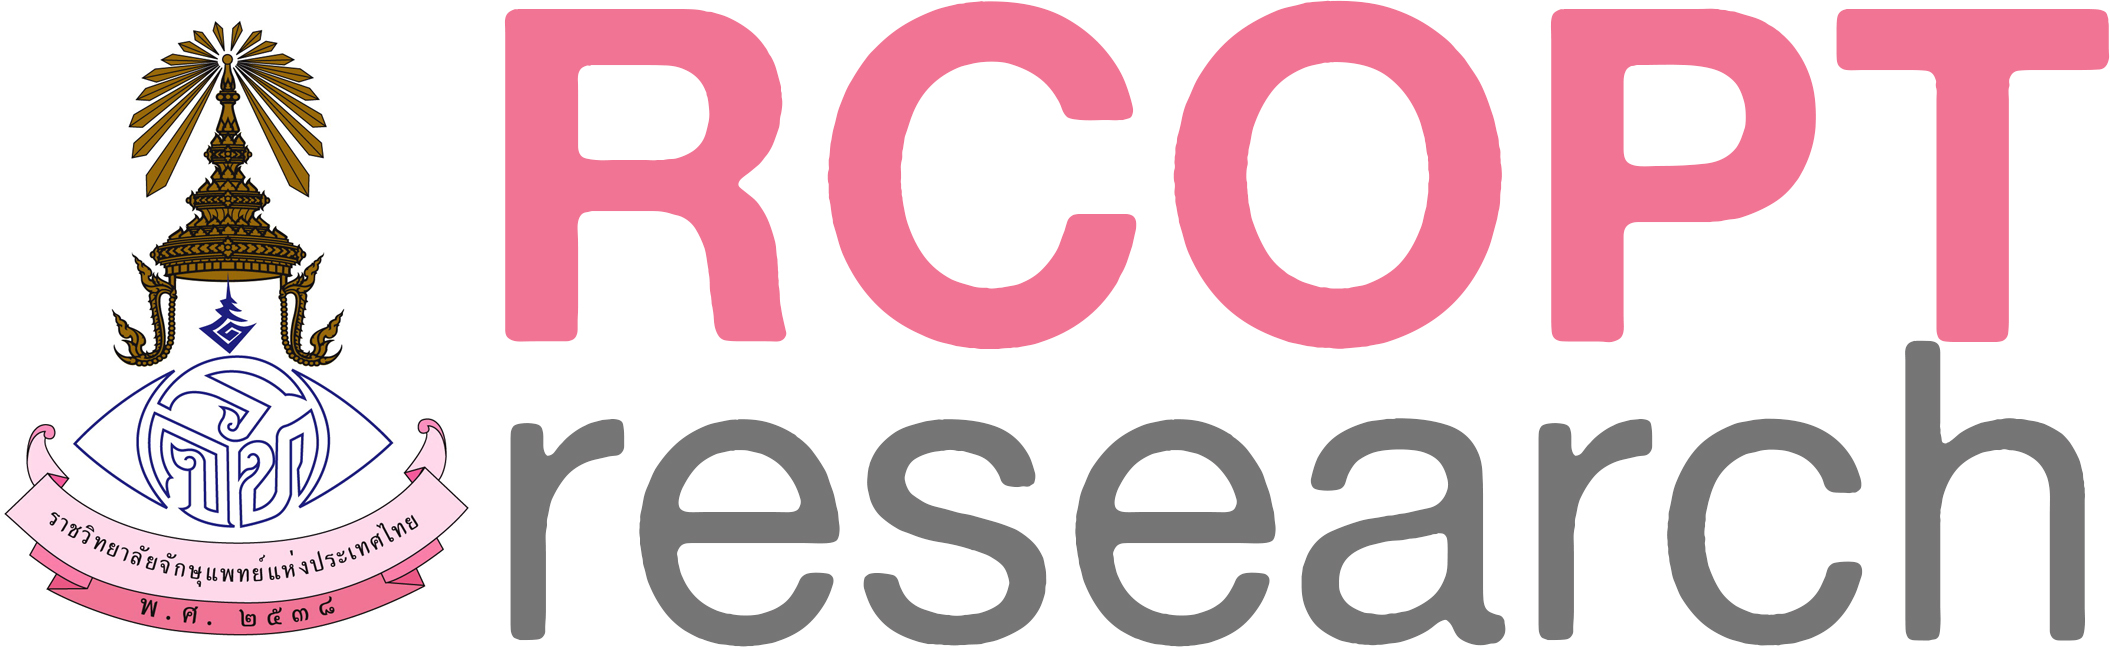 2099RCOPT research logo1.jpg